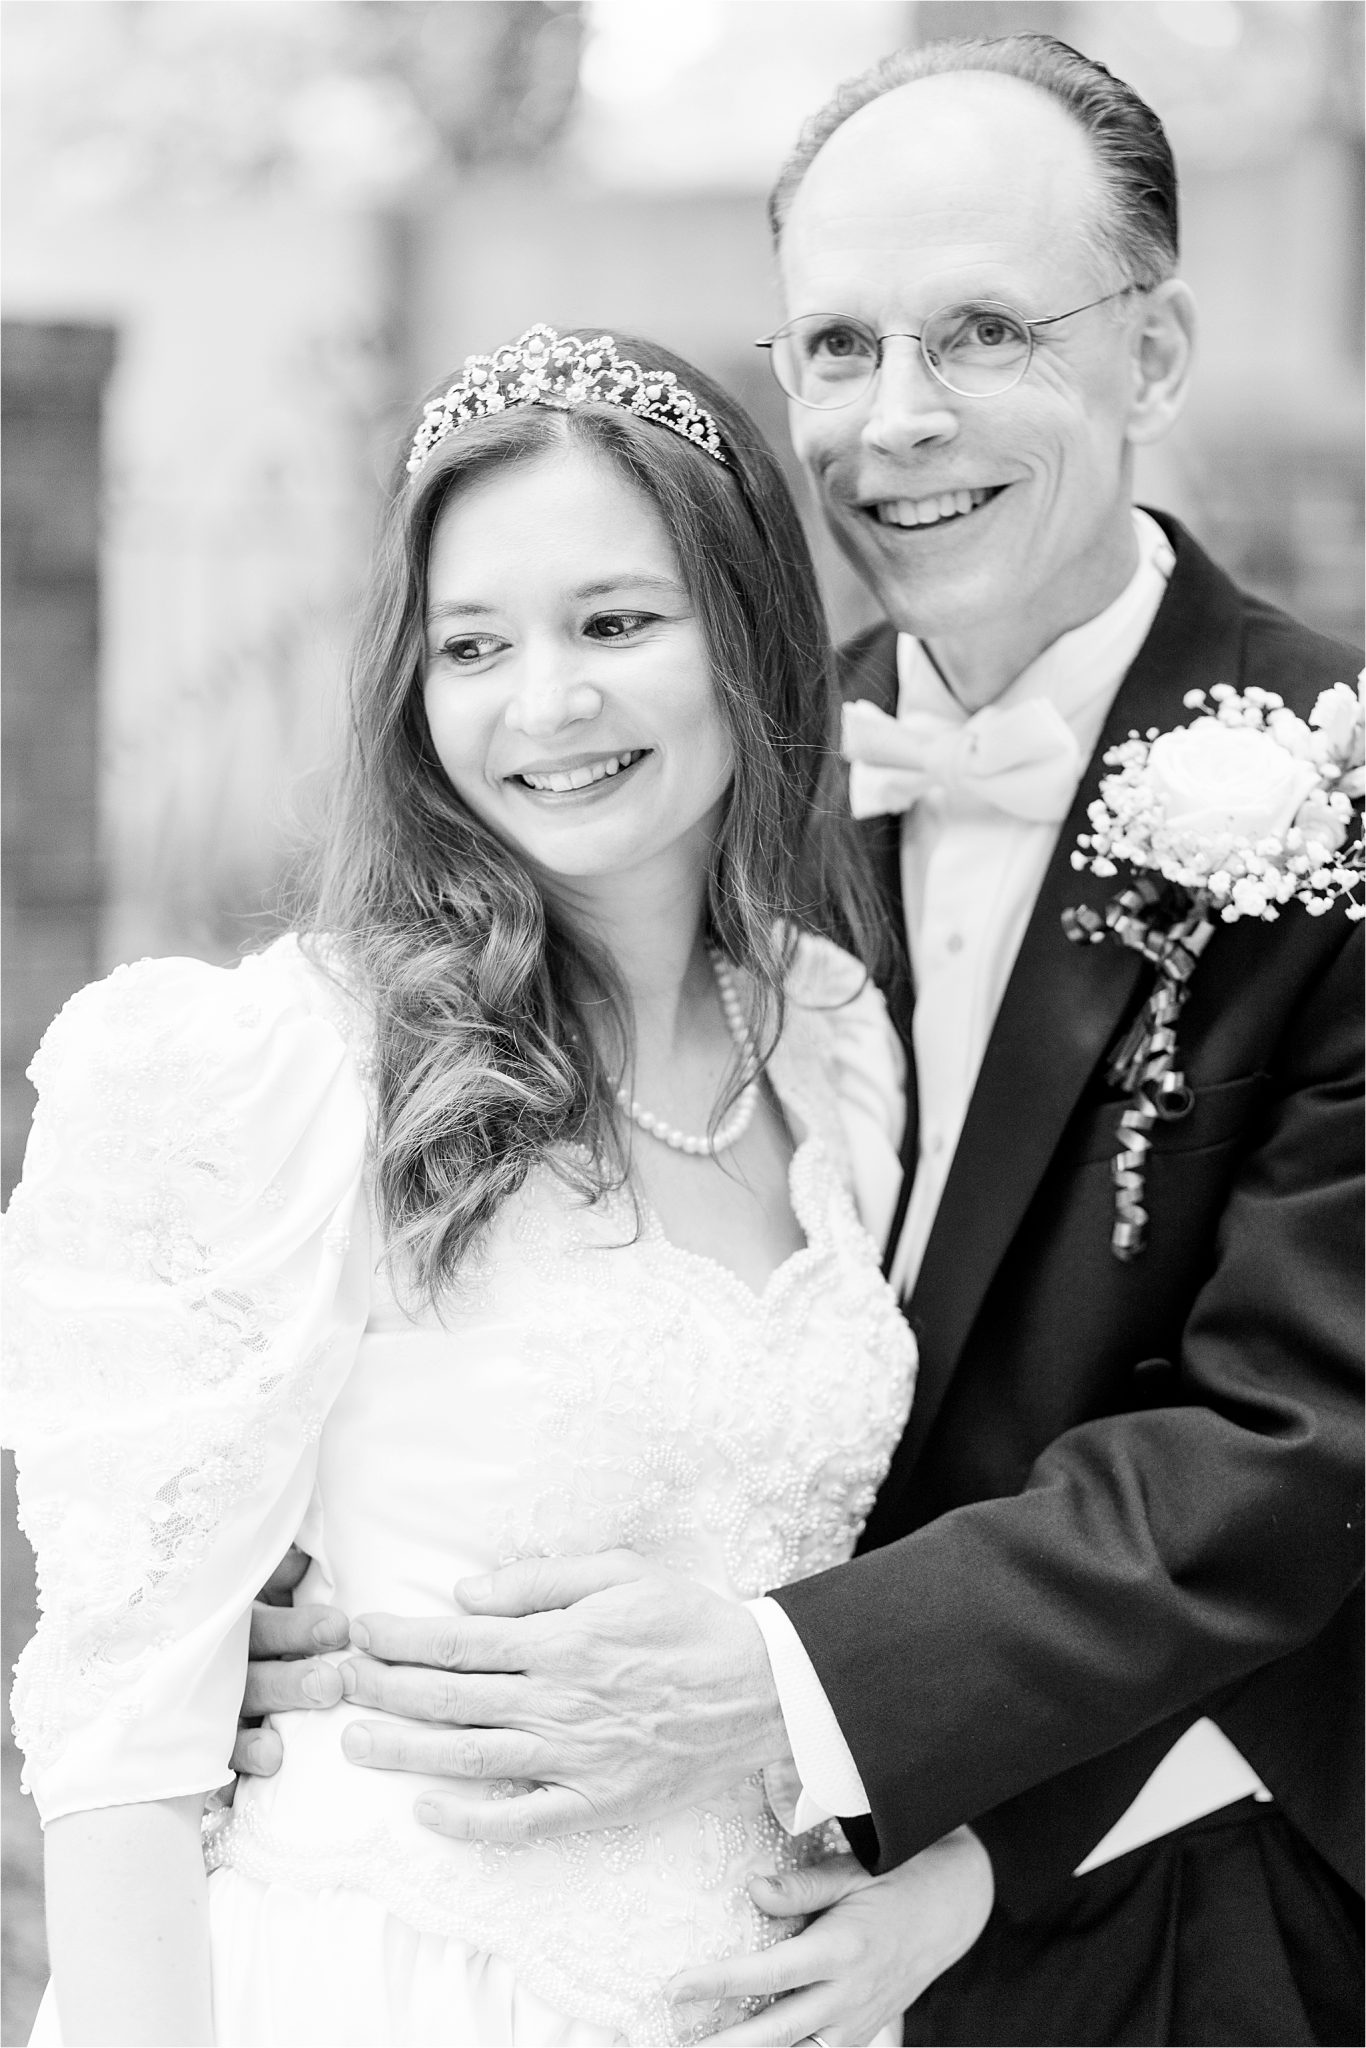 wedding dress-scallop neckline-bridal tiara-mature bride and groom